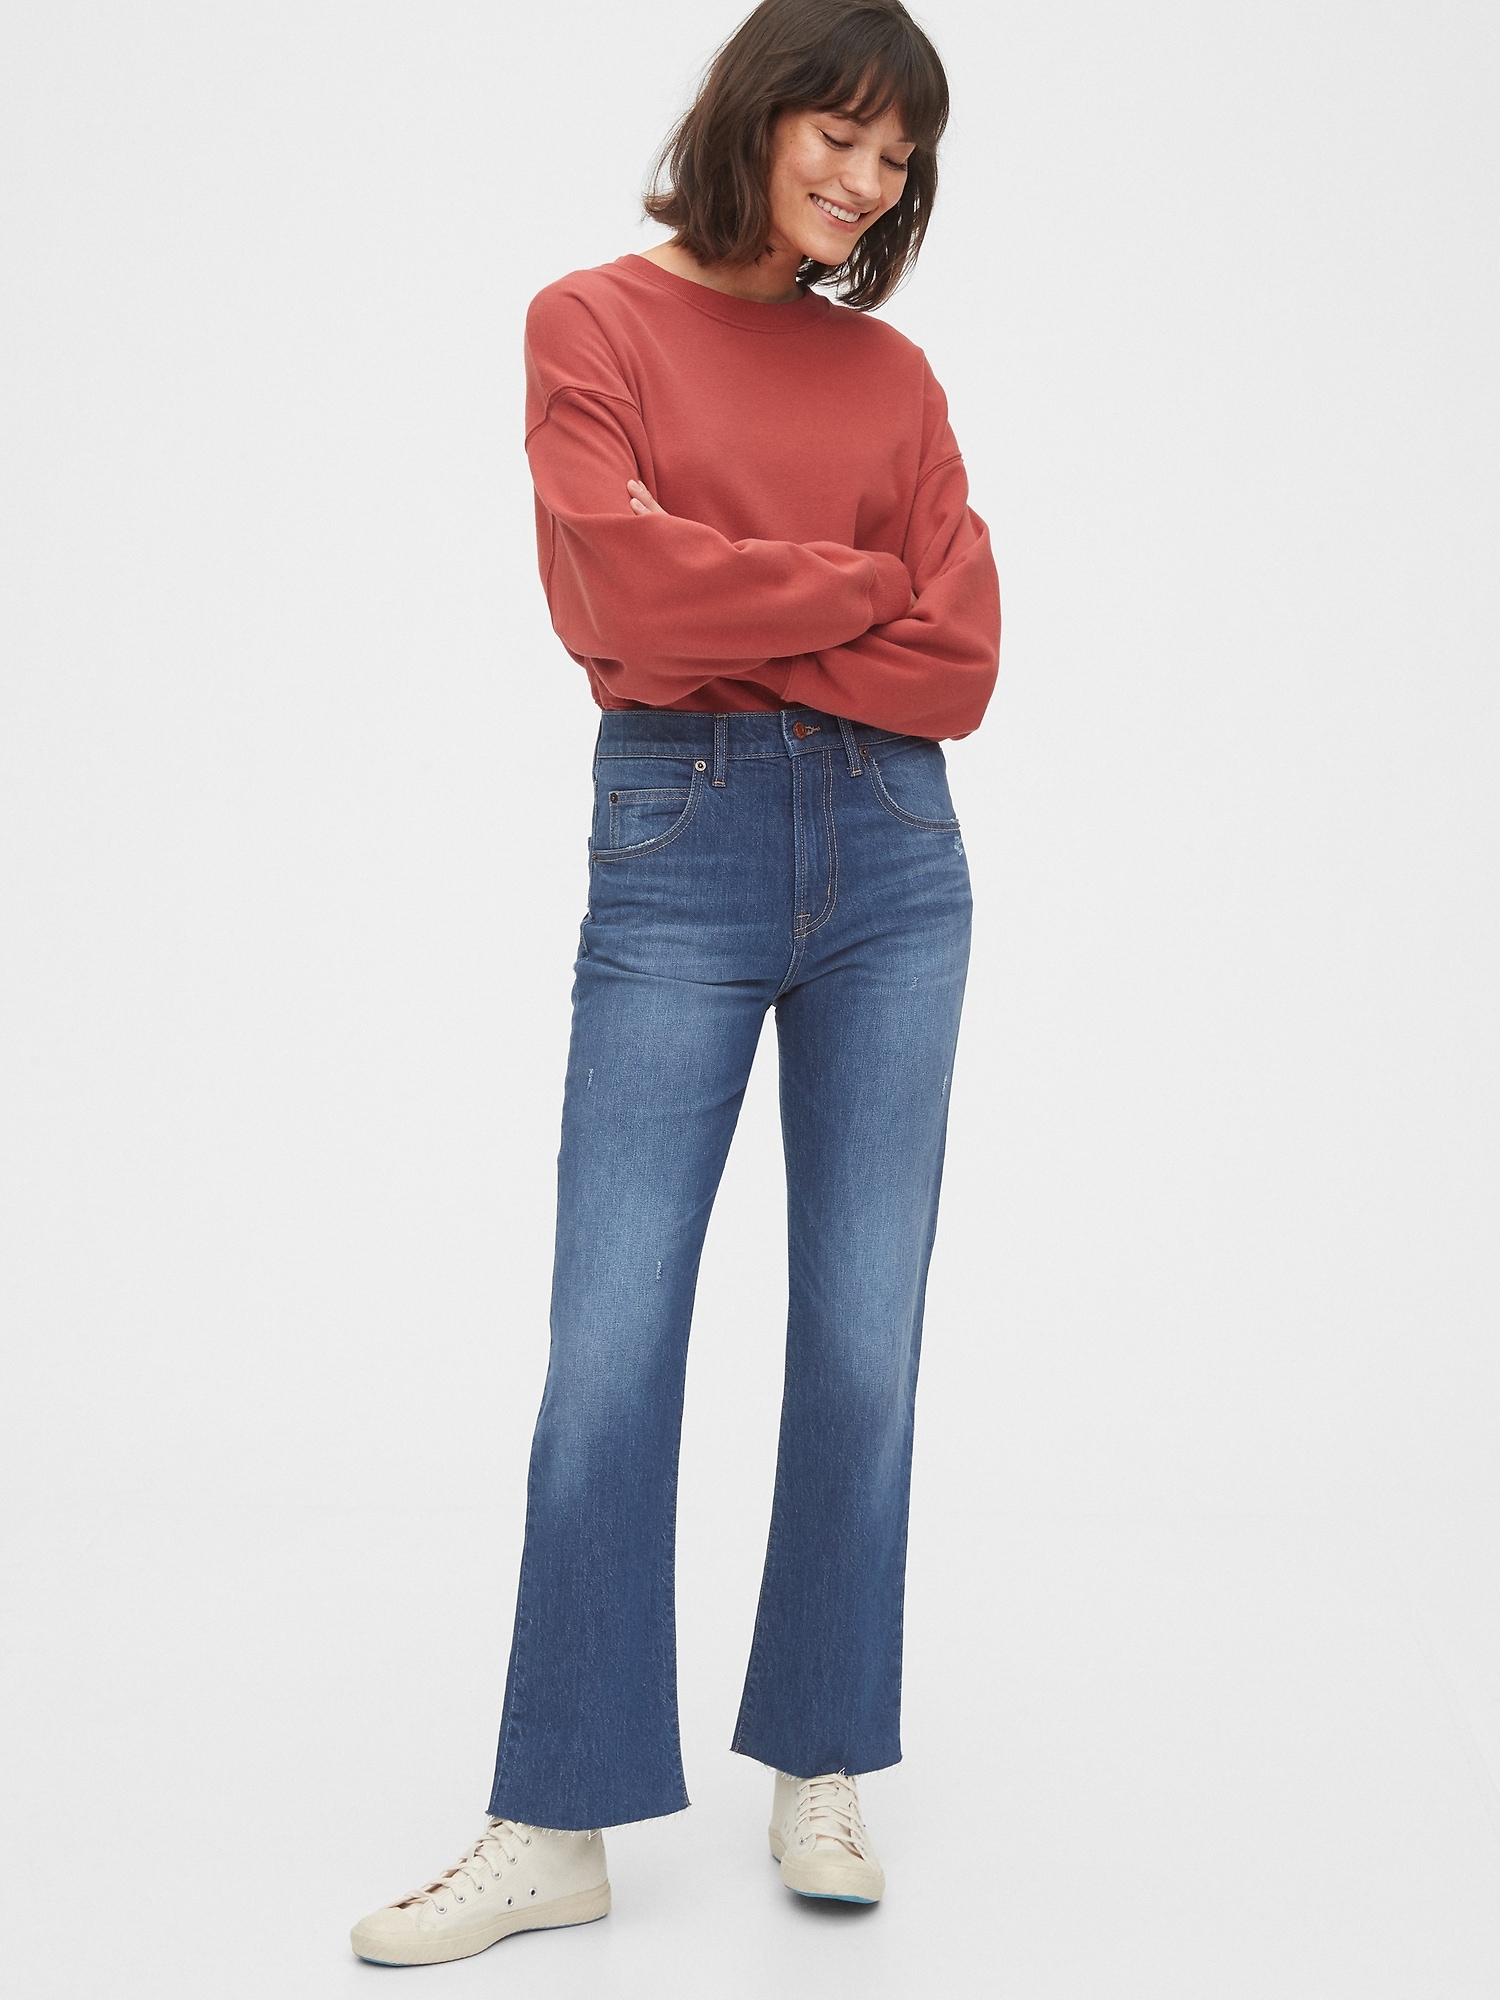 skinny jean overalls plus size